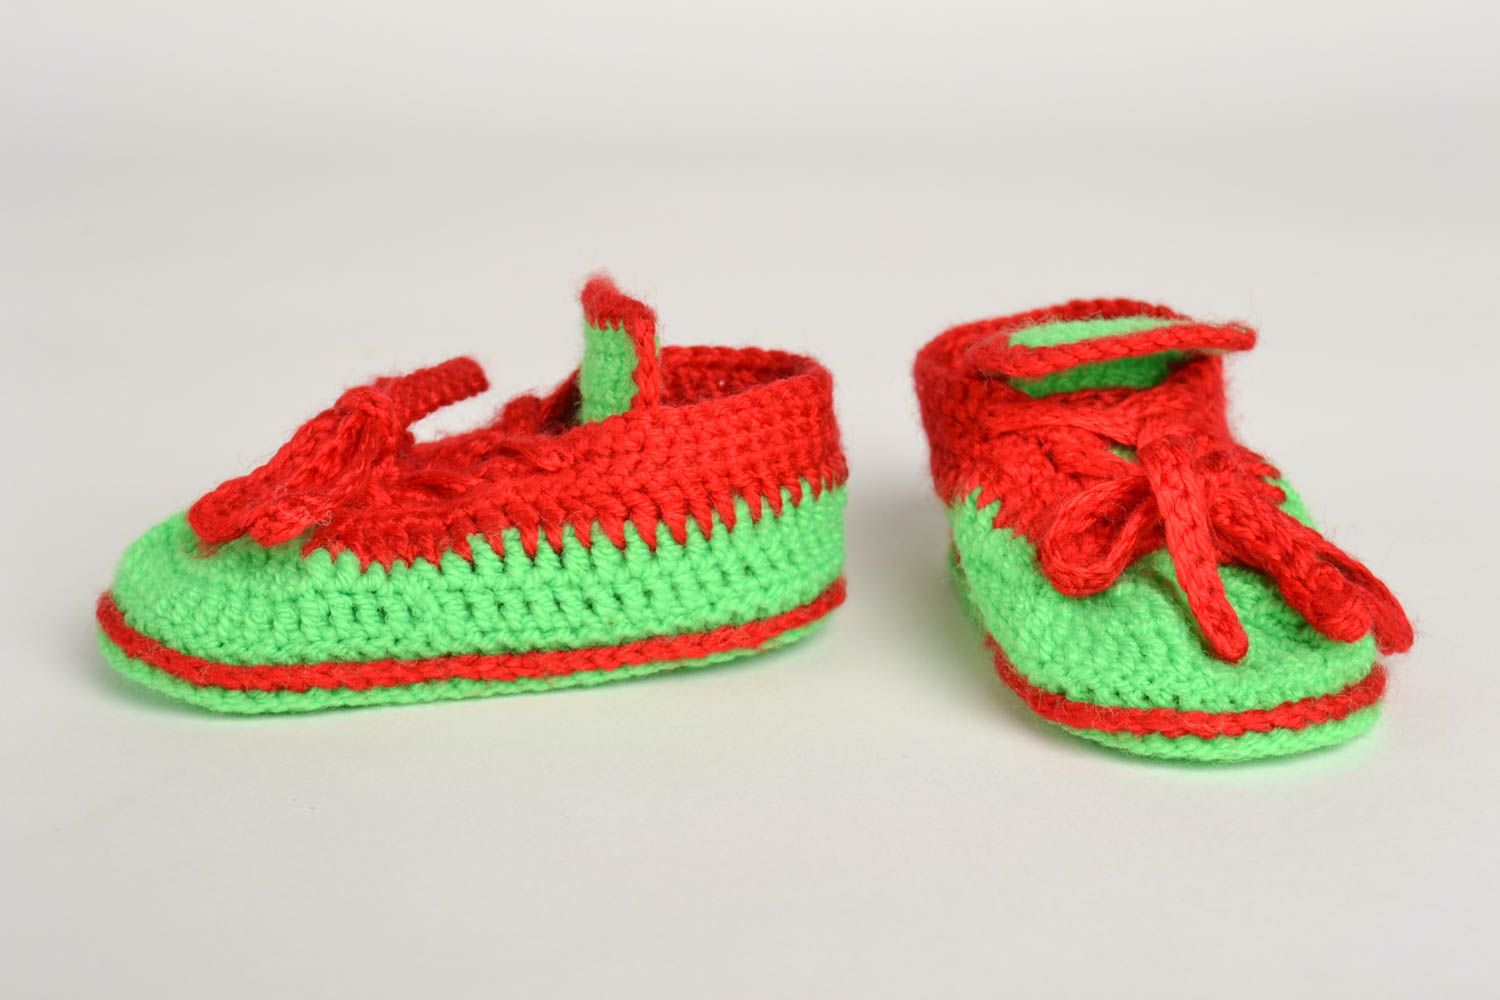 Handmade crochet baby booties crochet ideas cute baby outfits gift ideas photo 2